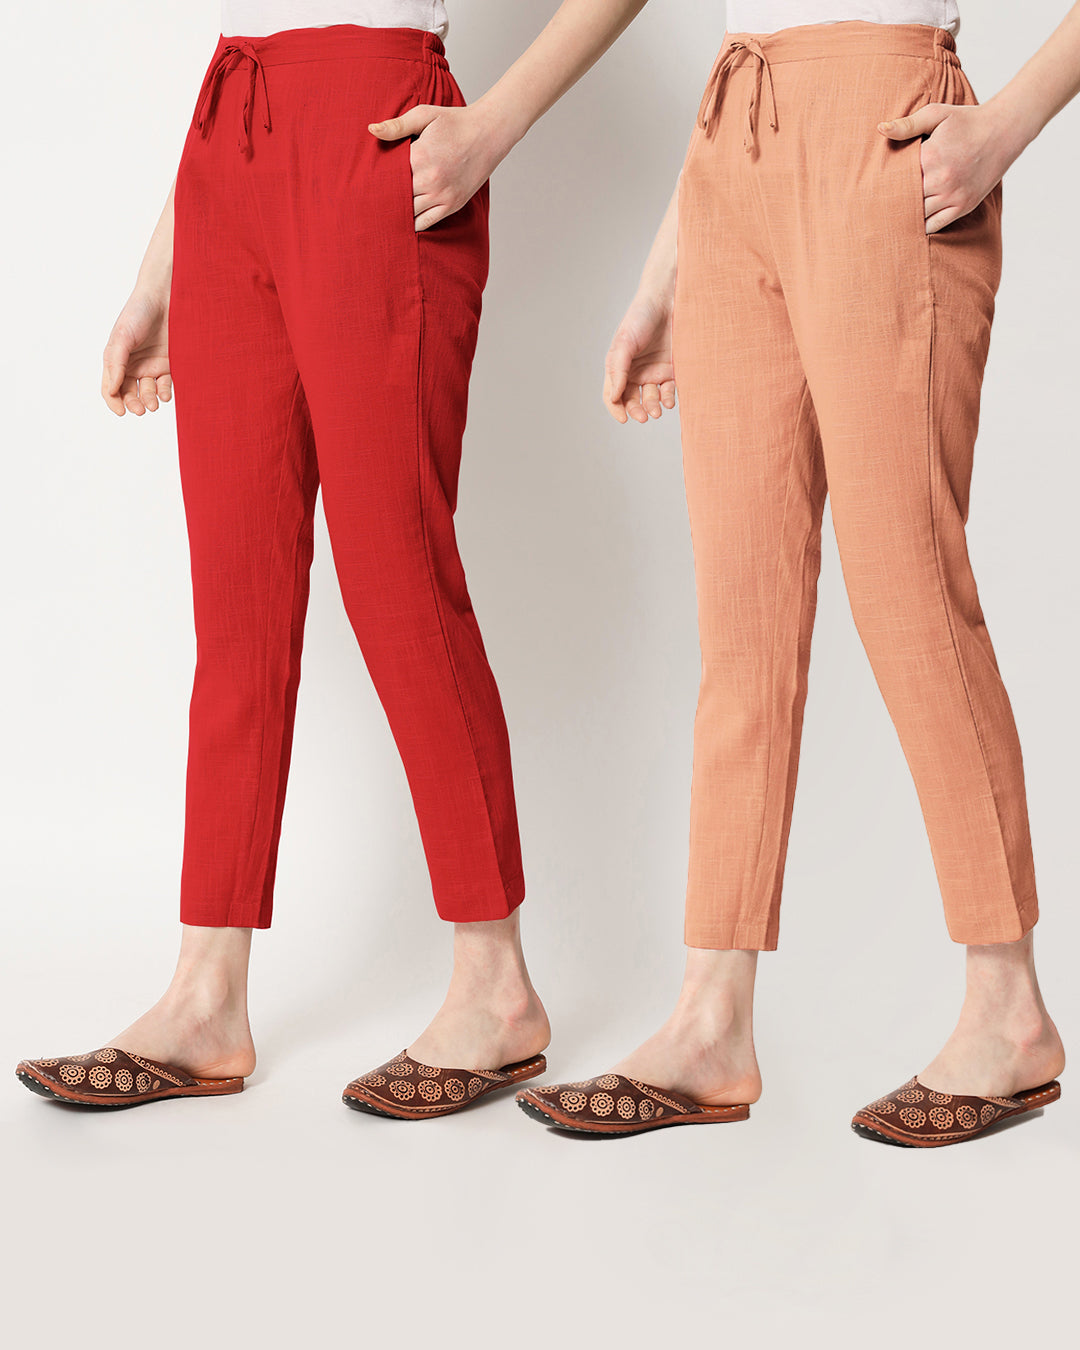 Combo: Classic Red & Blush Beige Cigarette Pants- Set of 2